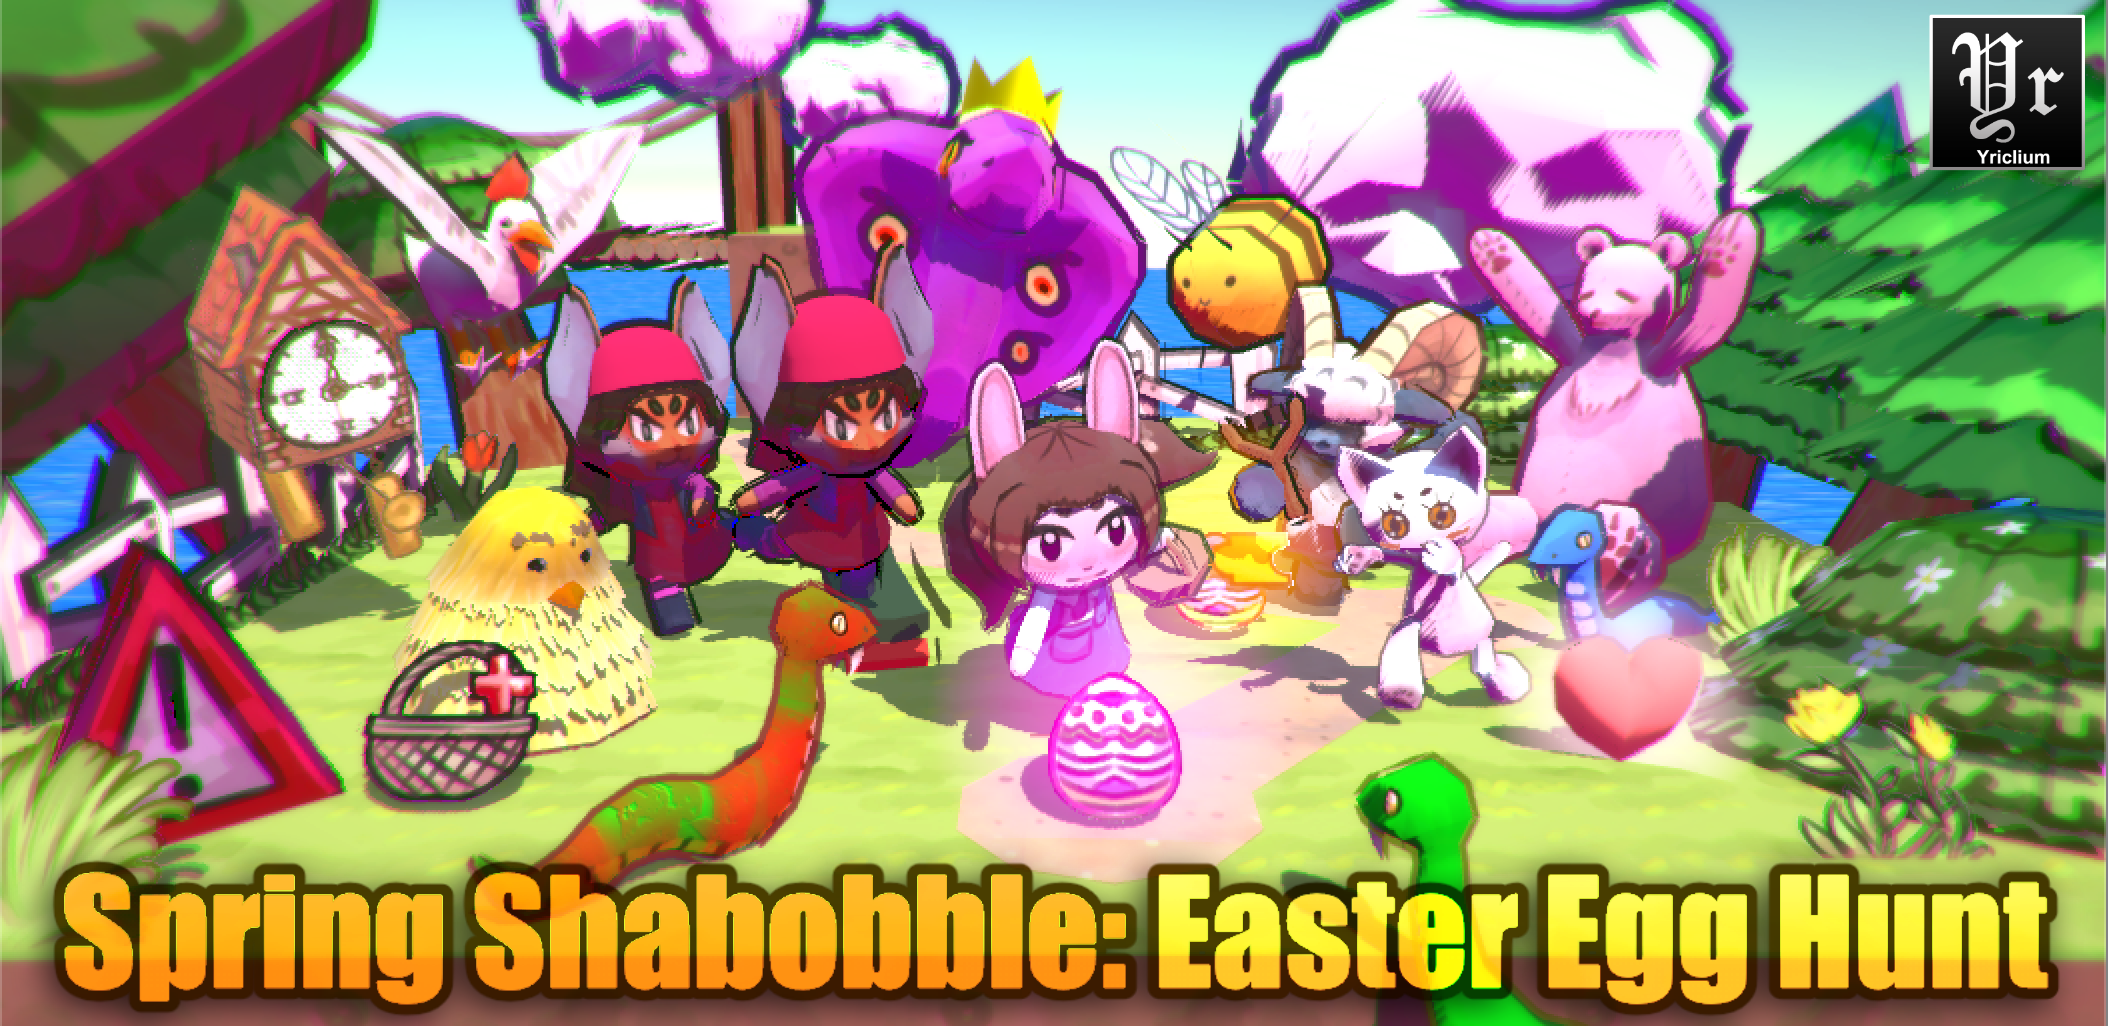 Spring Shabobble: Easter Egg Hunt